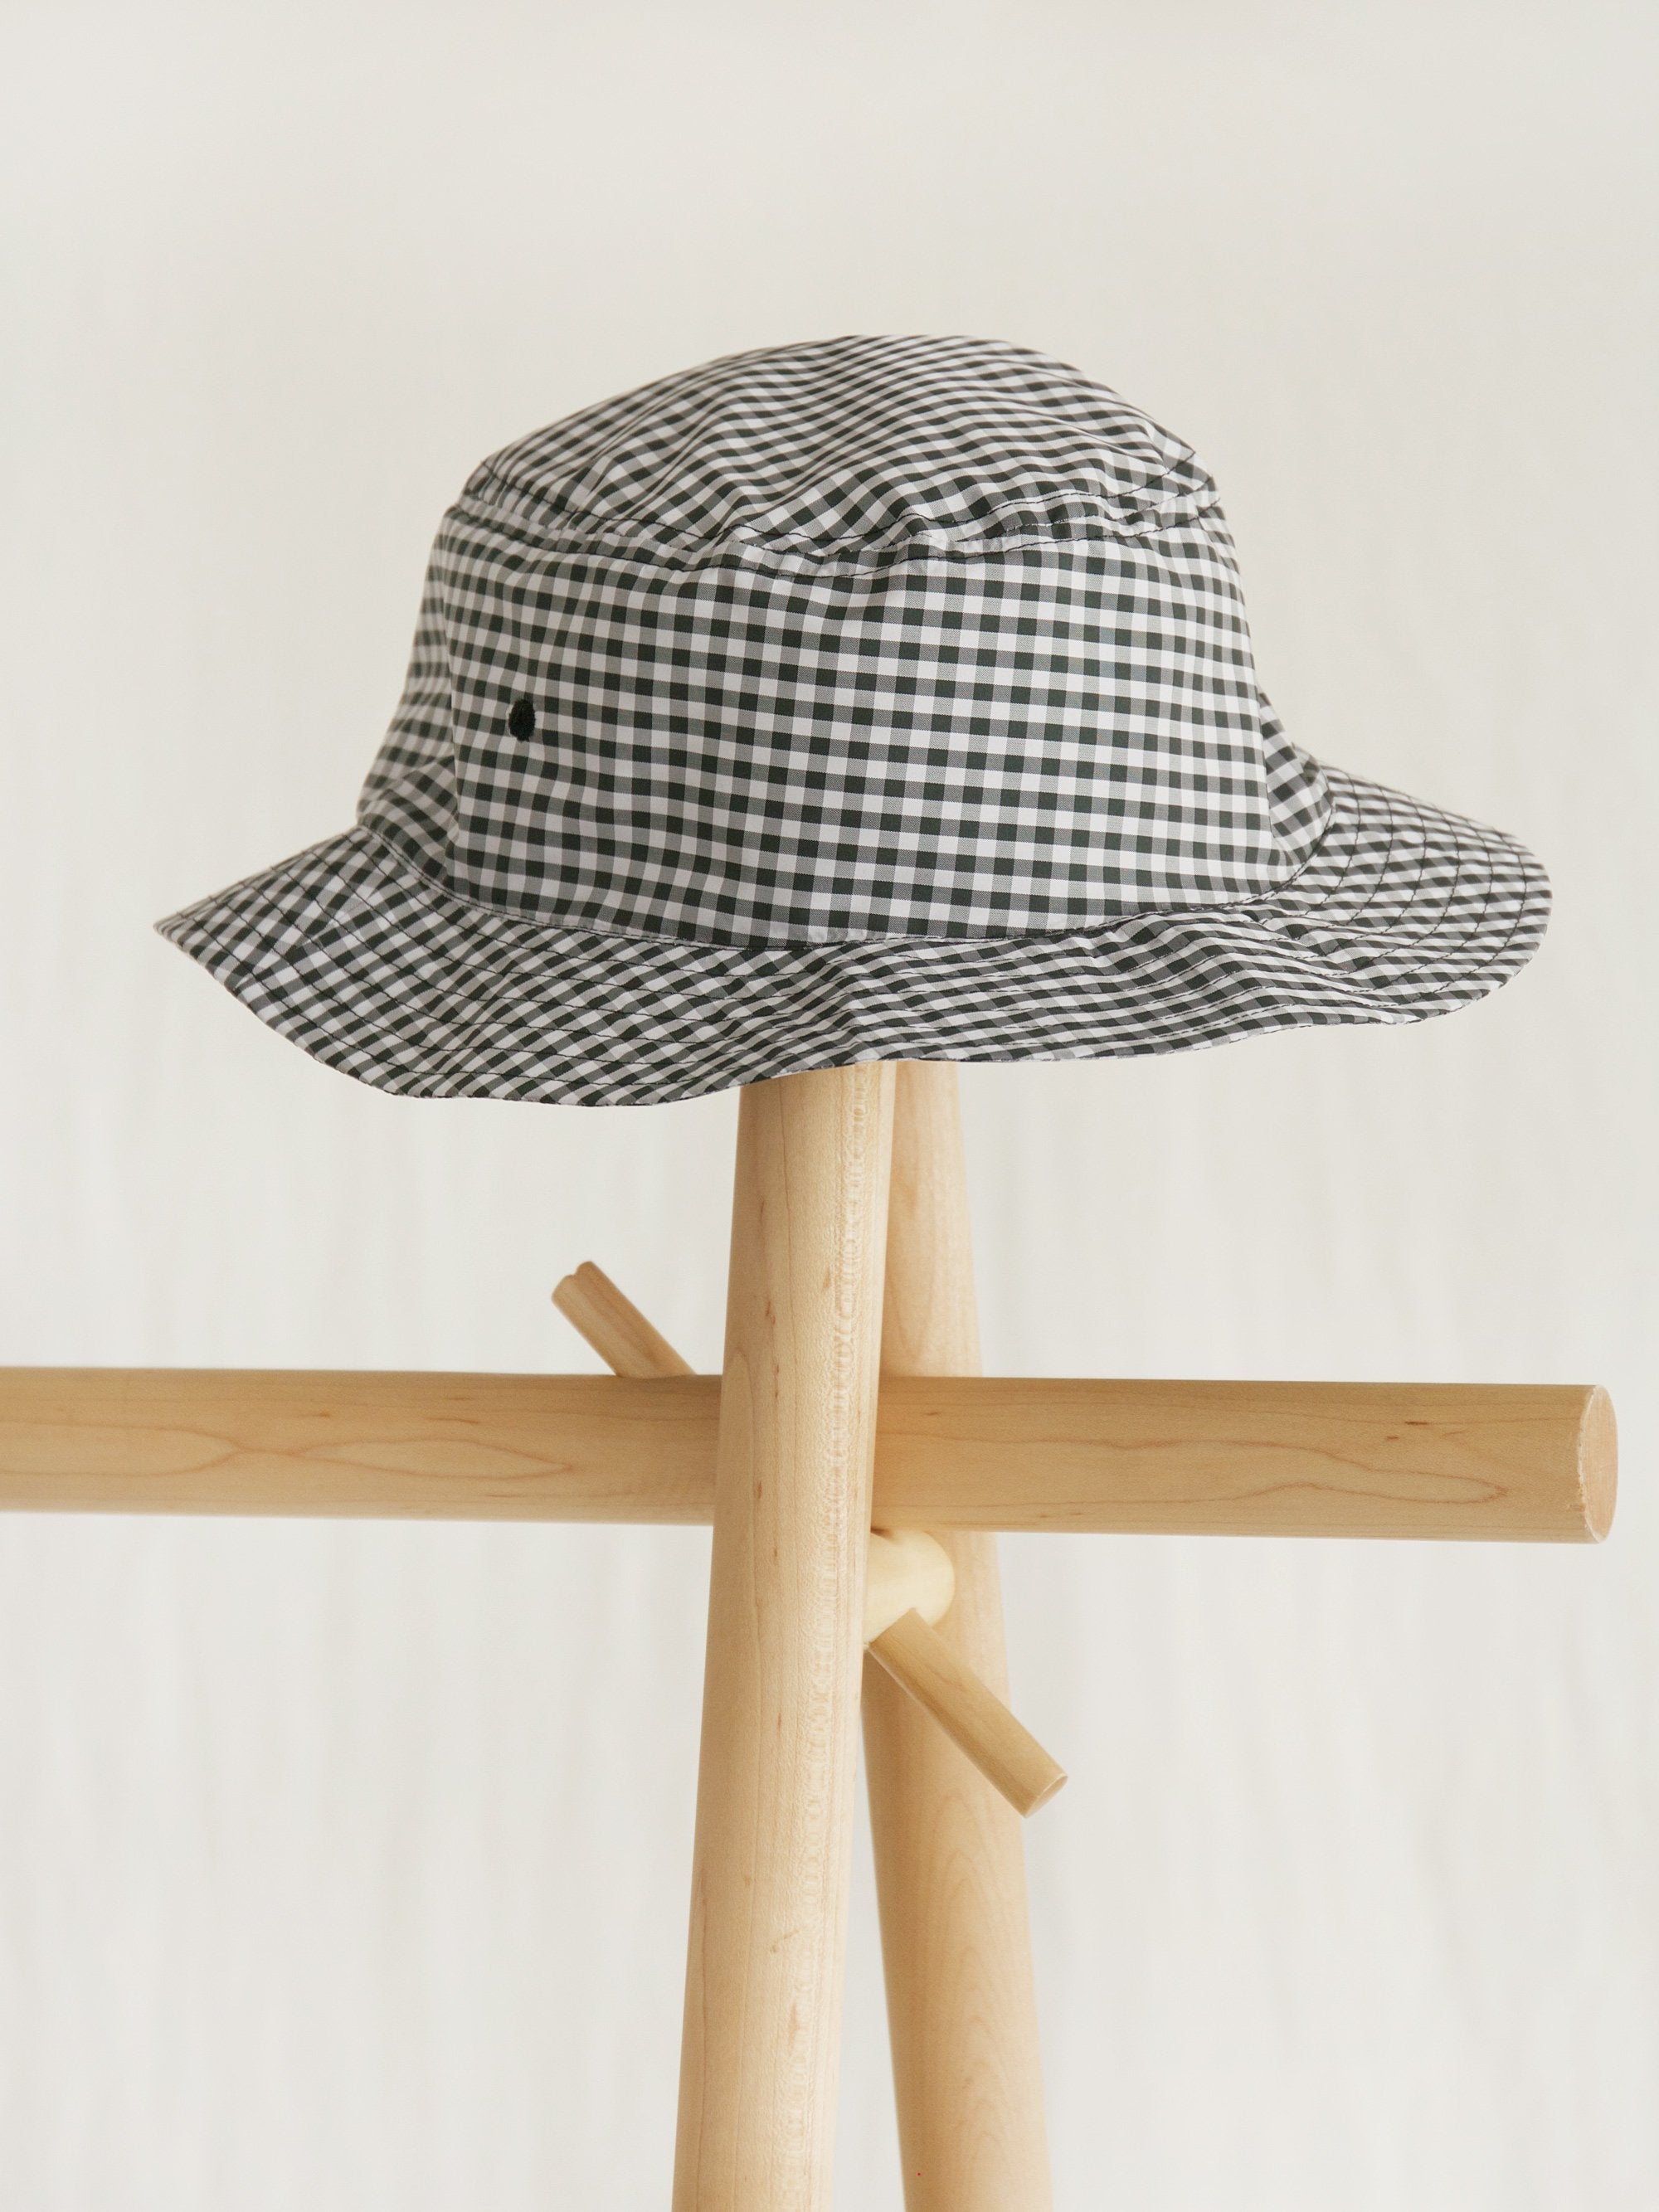 Namu Shop - paa Bucket Hat One - Charcoal Gingham